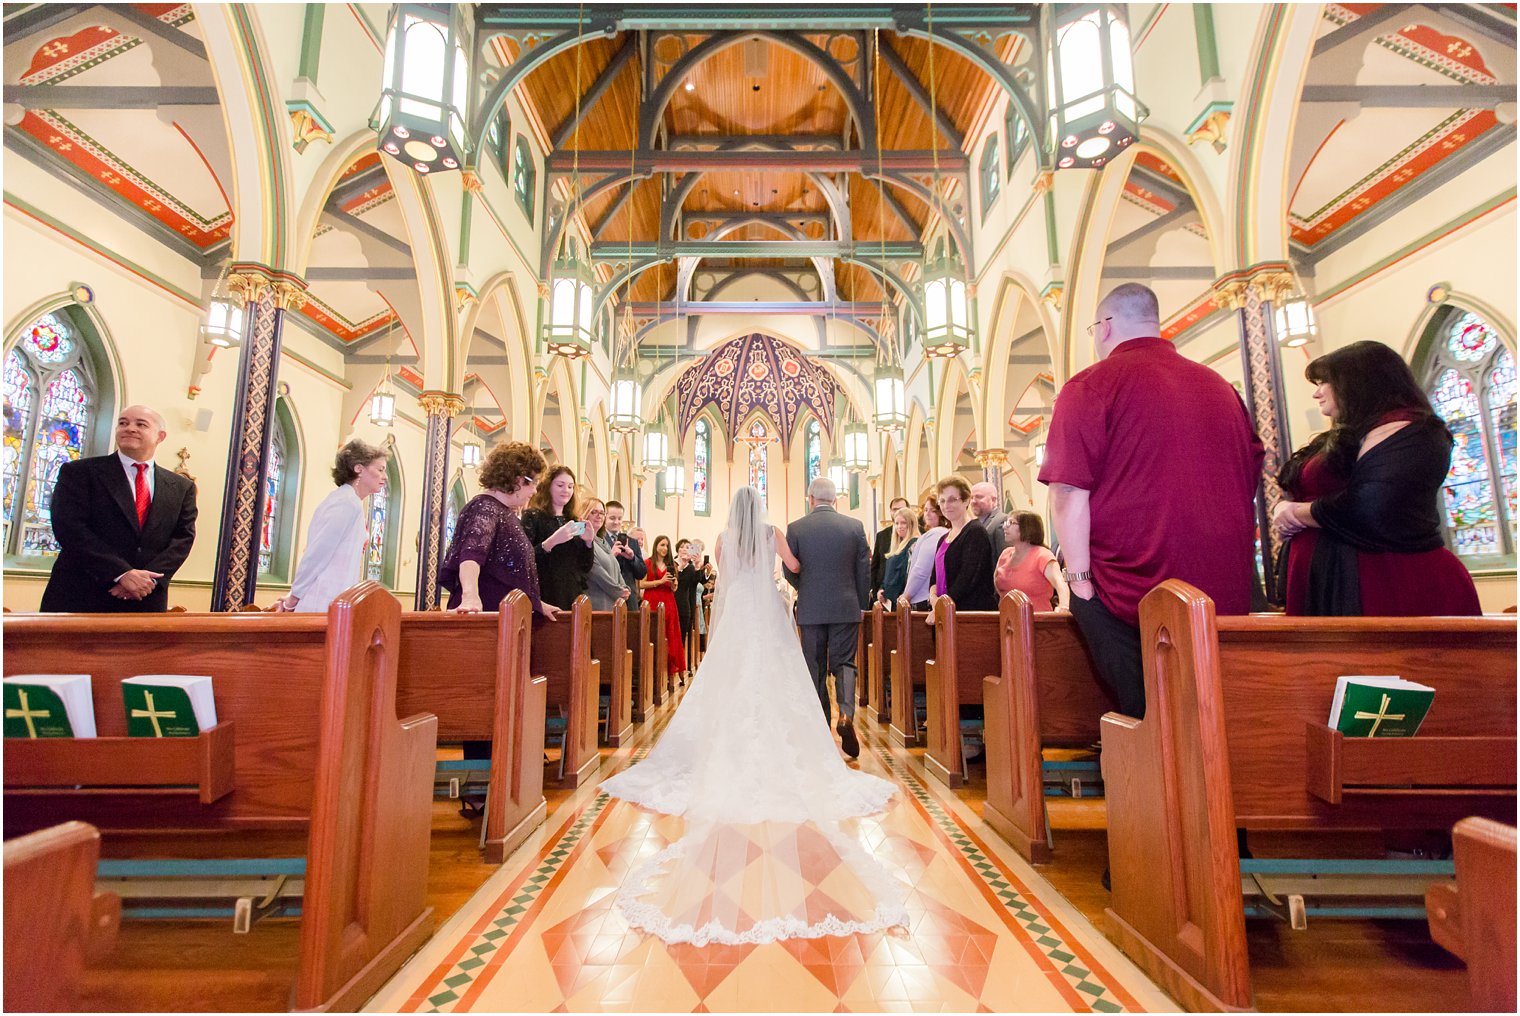 New Jersey church wedding photographed by Idalia Photography